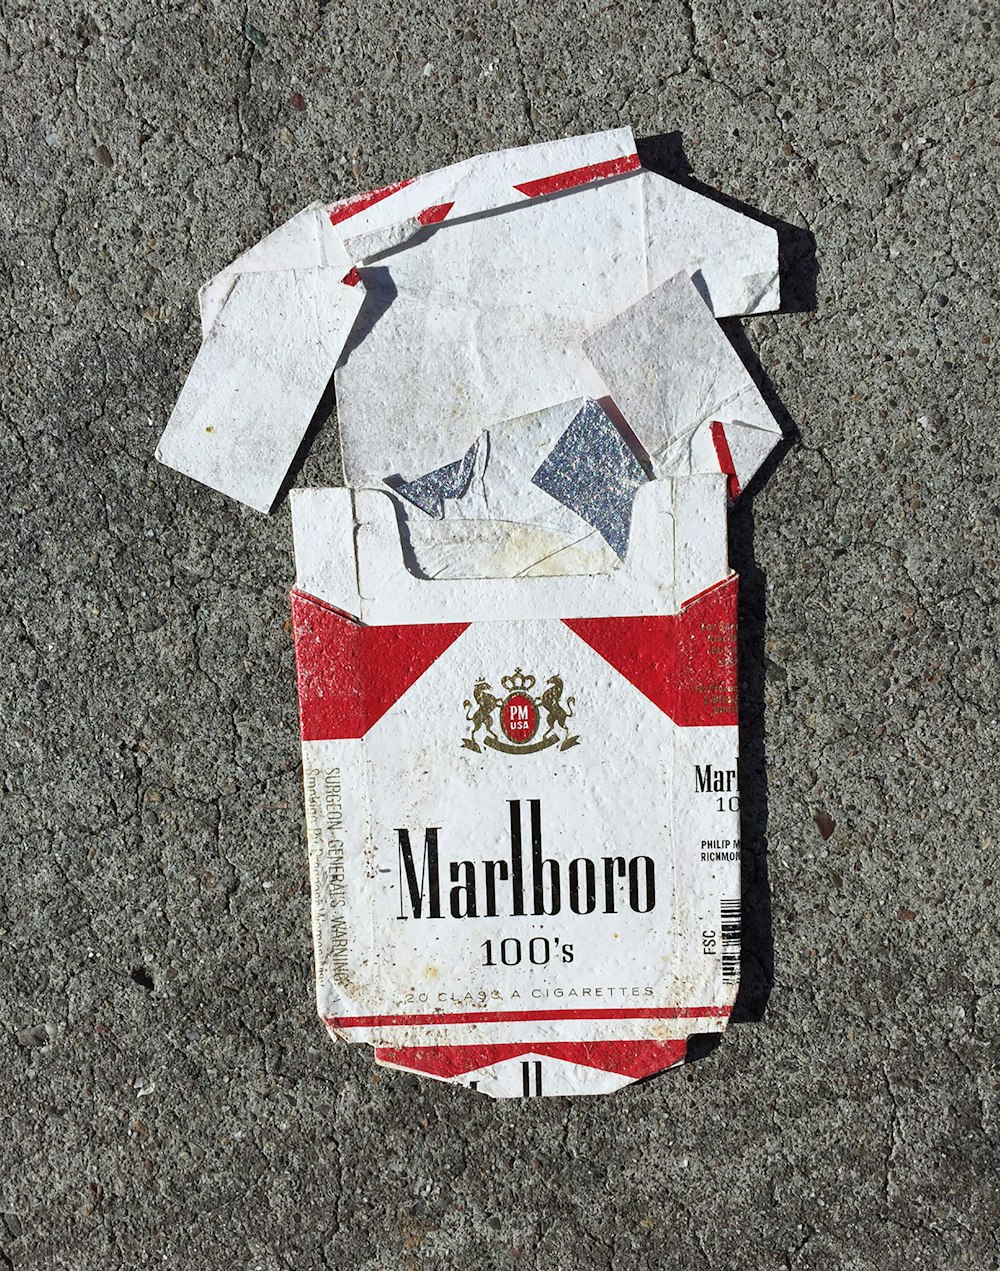 red Marlboro cigarette box on gray surface